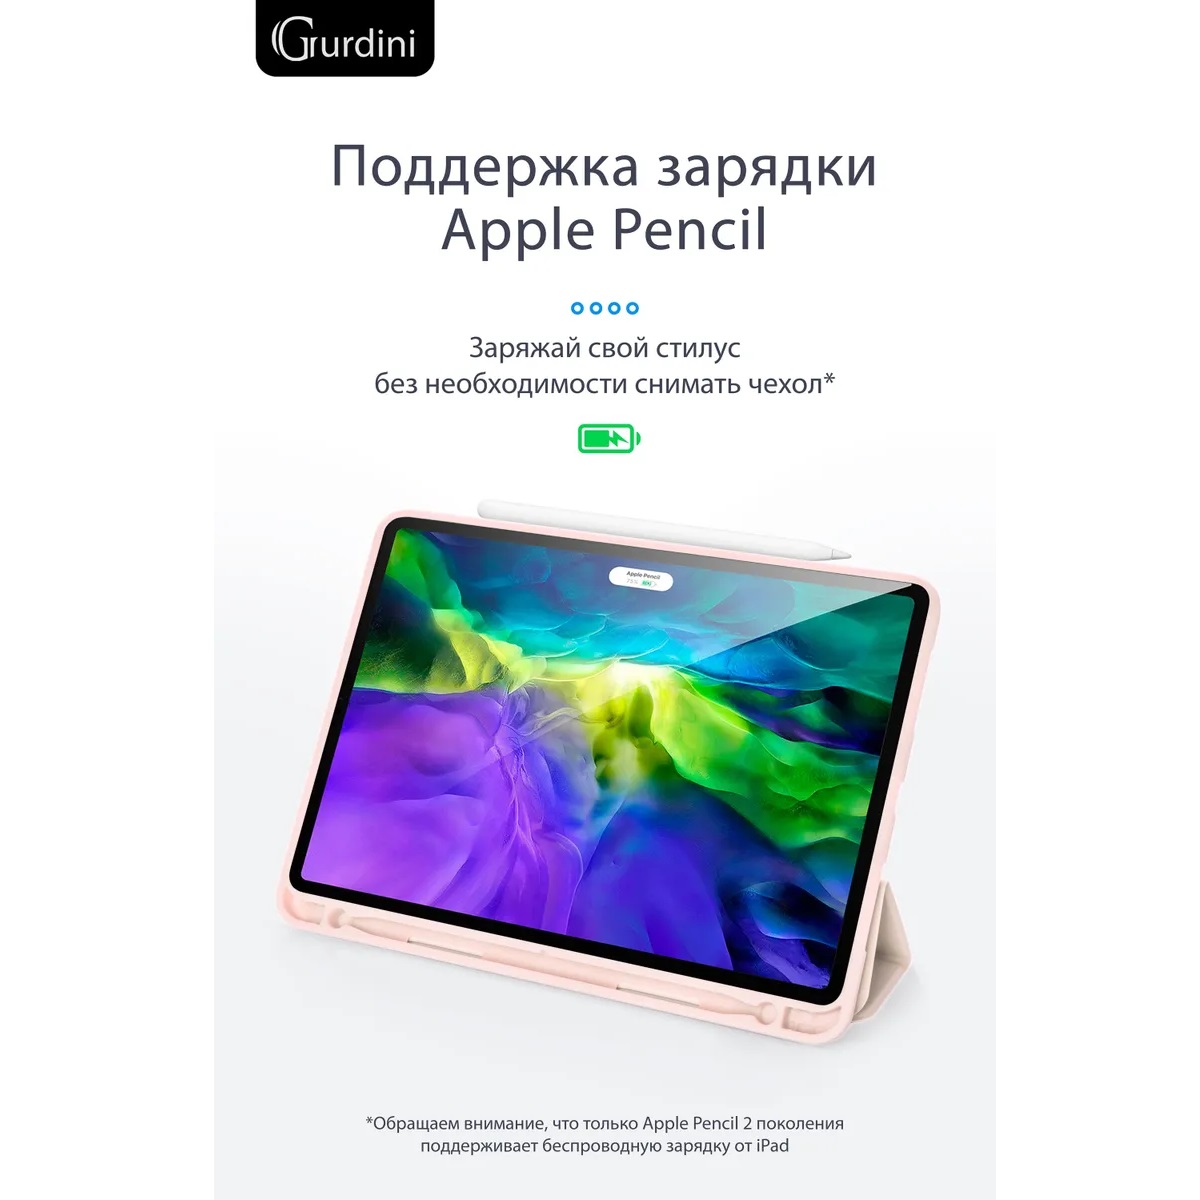 Чехол-книжка Gurdini Milano Series (pen slot) для iPad Pro 11 Pink Sand